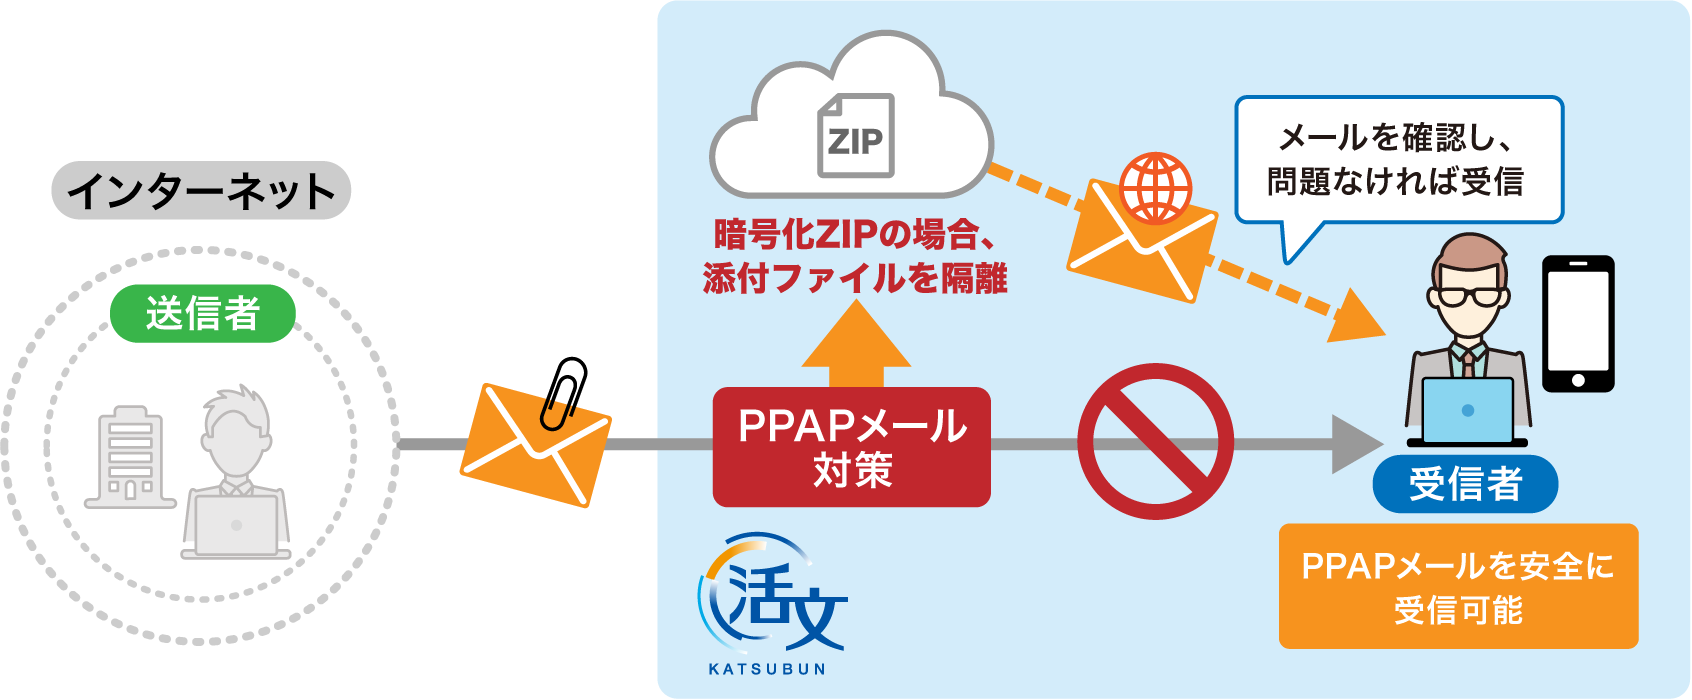 PPAPメール受信時のセキュリティ対策を強化 のイメージ